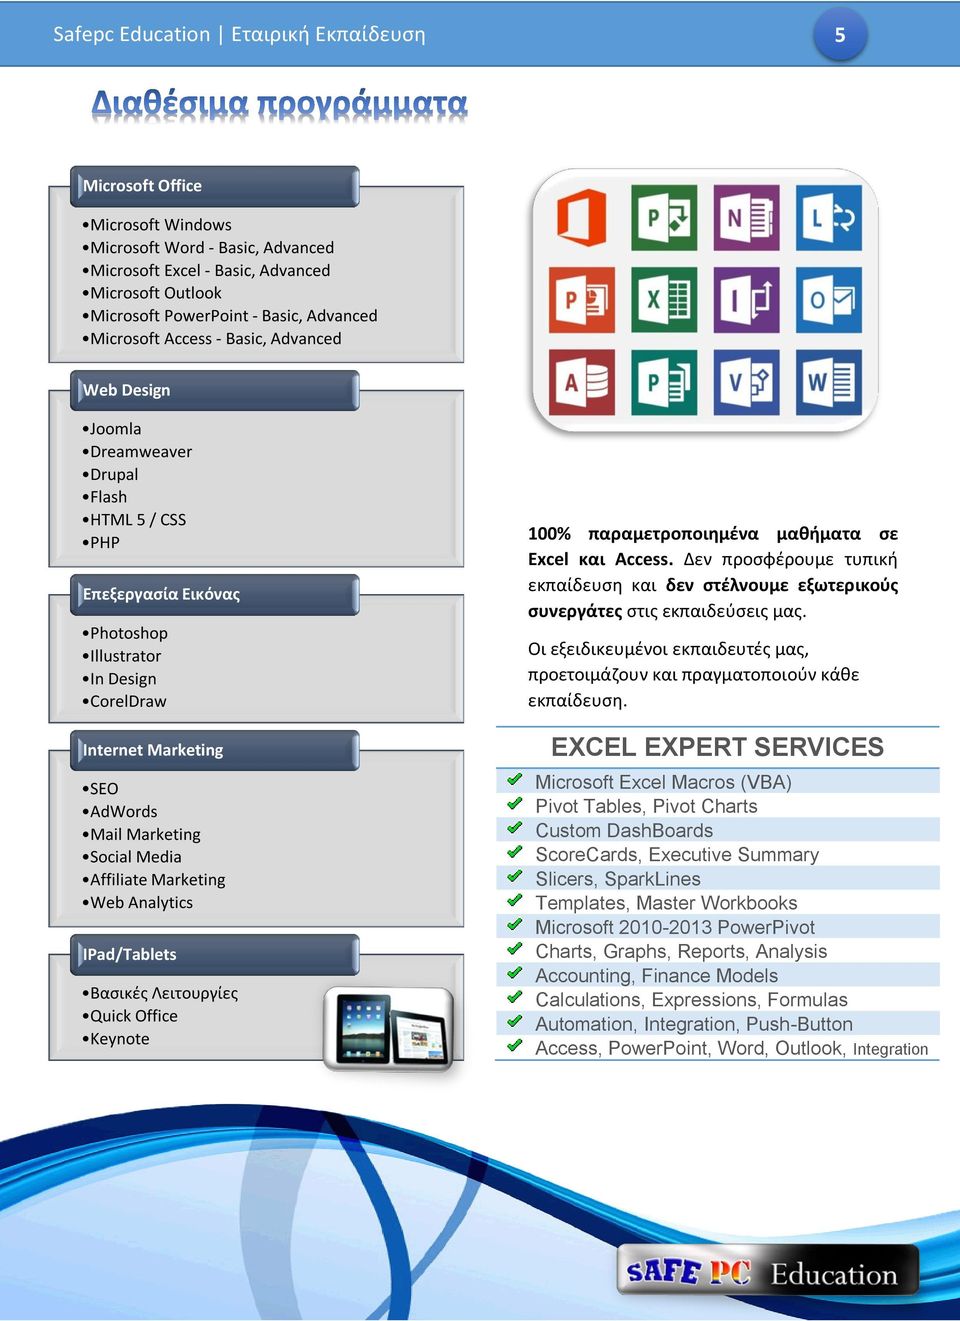 Marketing Social Media Affiliate Marketing Web Analytics IPad/Tablets Βασικές Λειτουργίες Quick Office Keynote 100% παραμετροποιημένα μαθήματα σε Excel και Access.